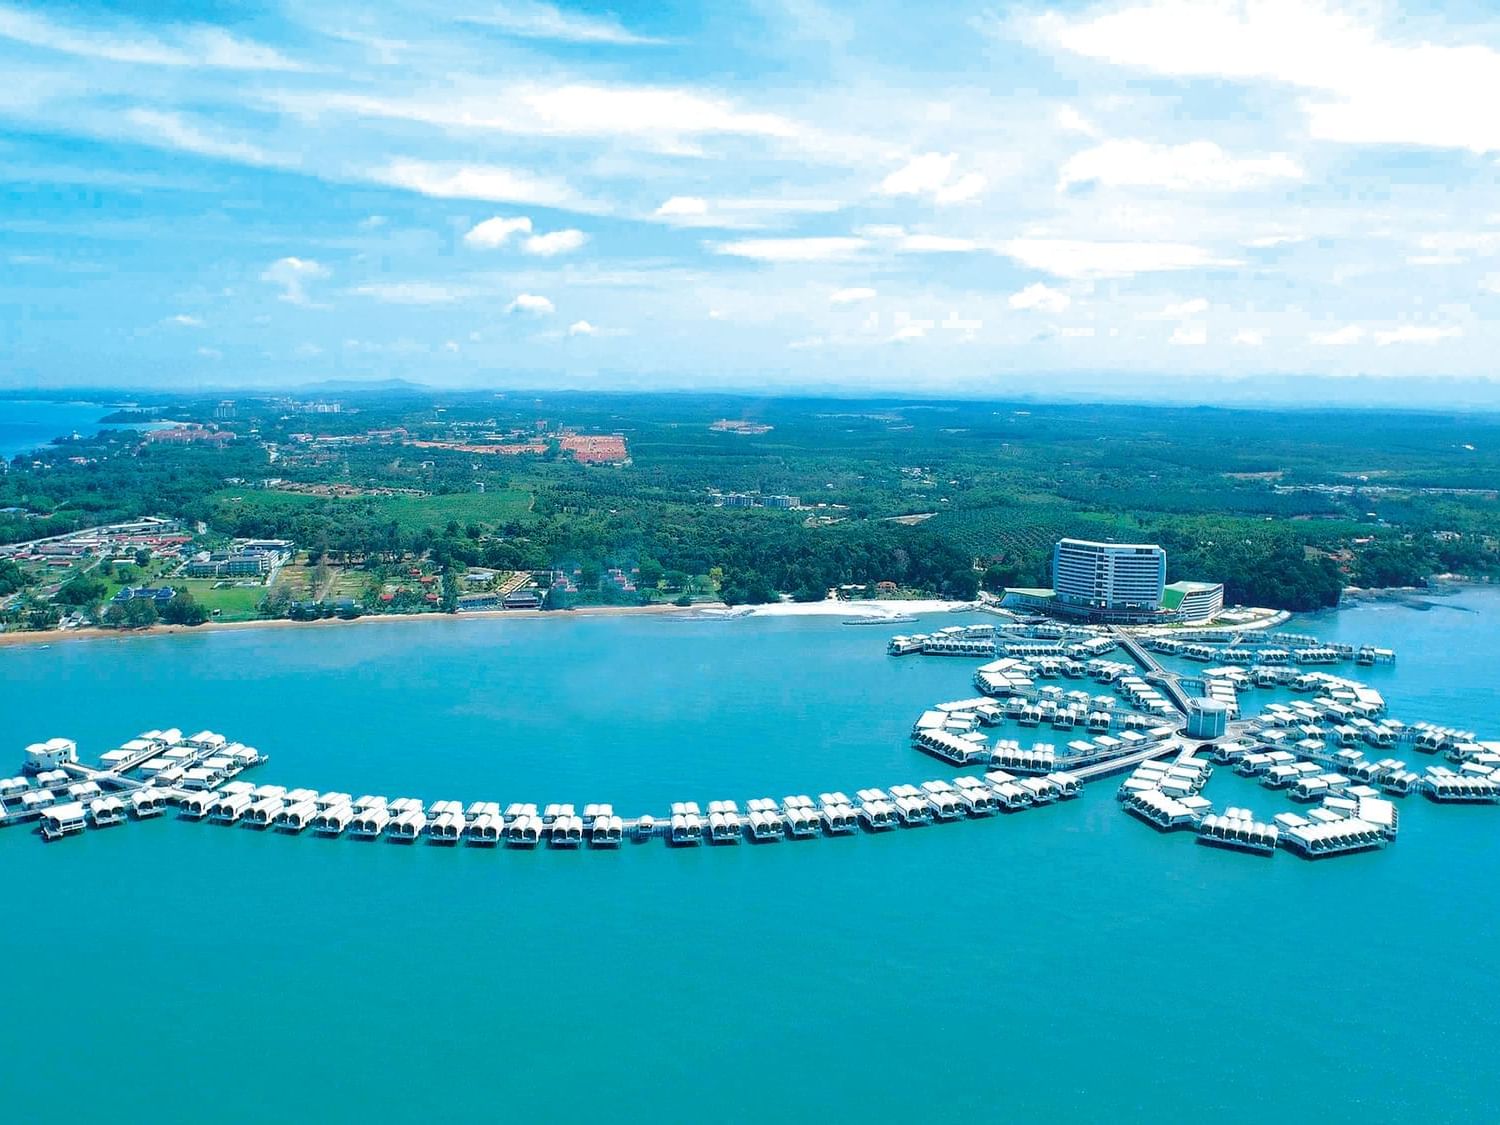 Corus paradise resort port dickson review